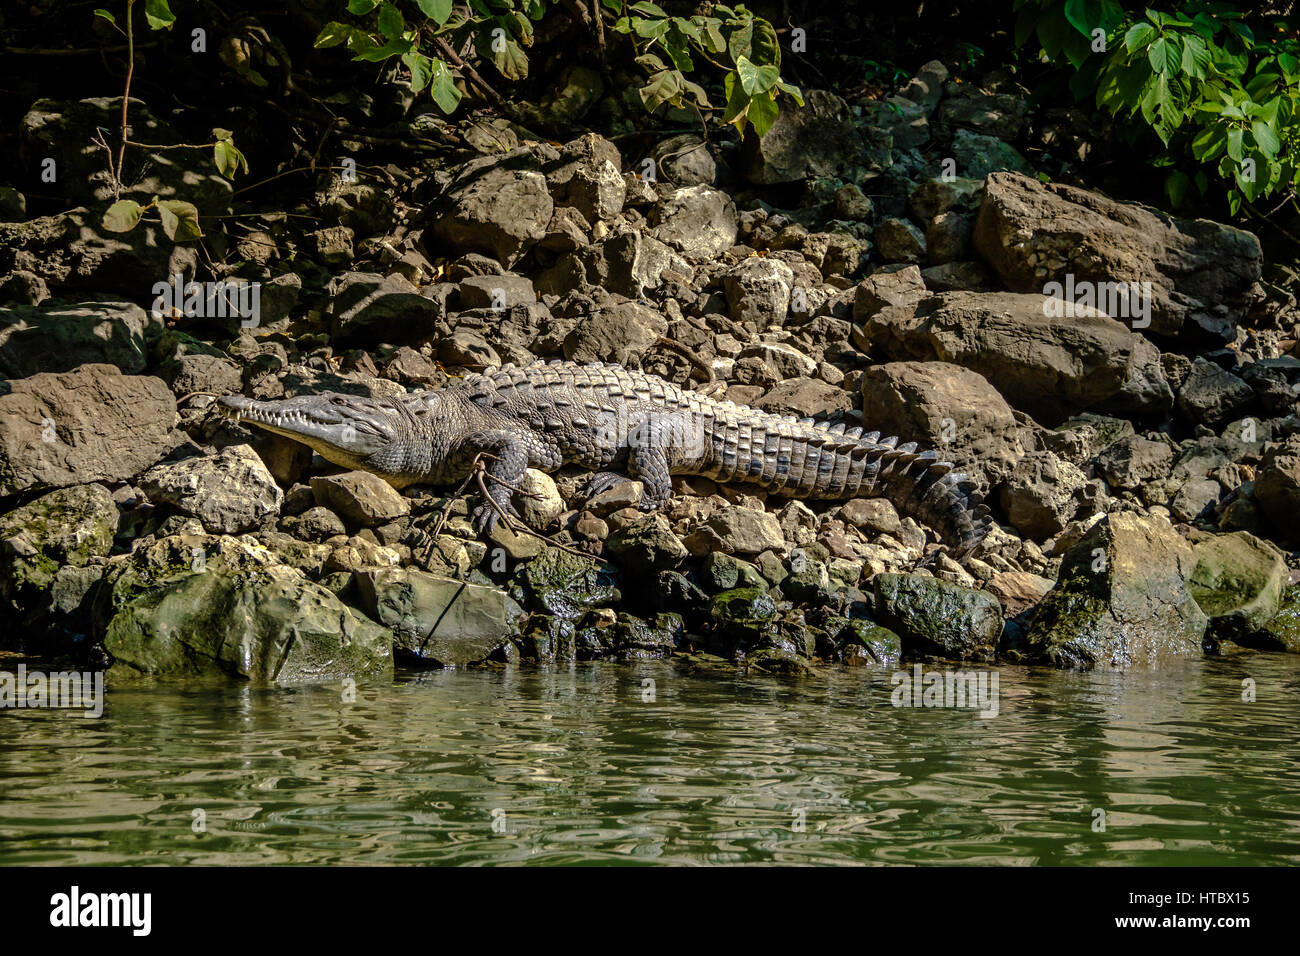 Crocodile at Sumidero Canyon - Chiapas, Mexico Stock Photo